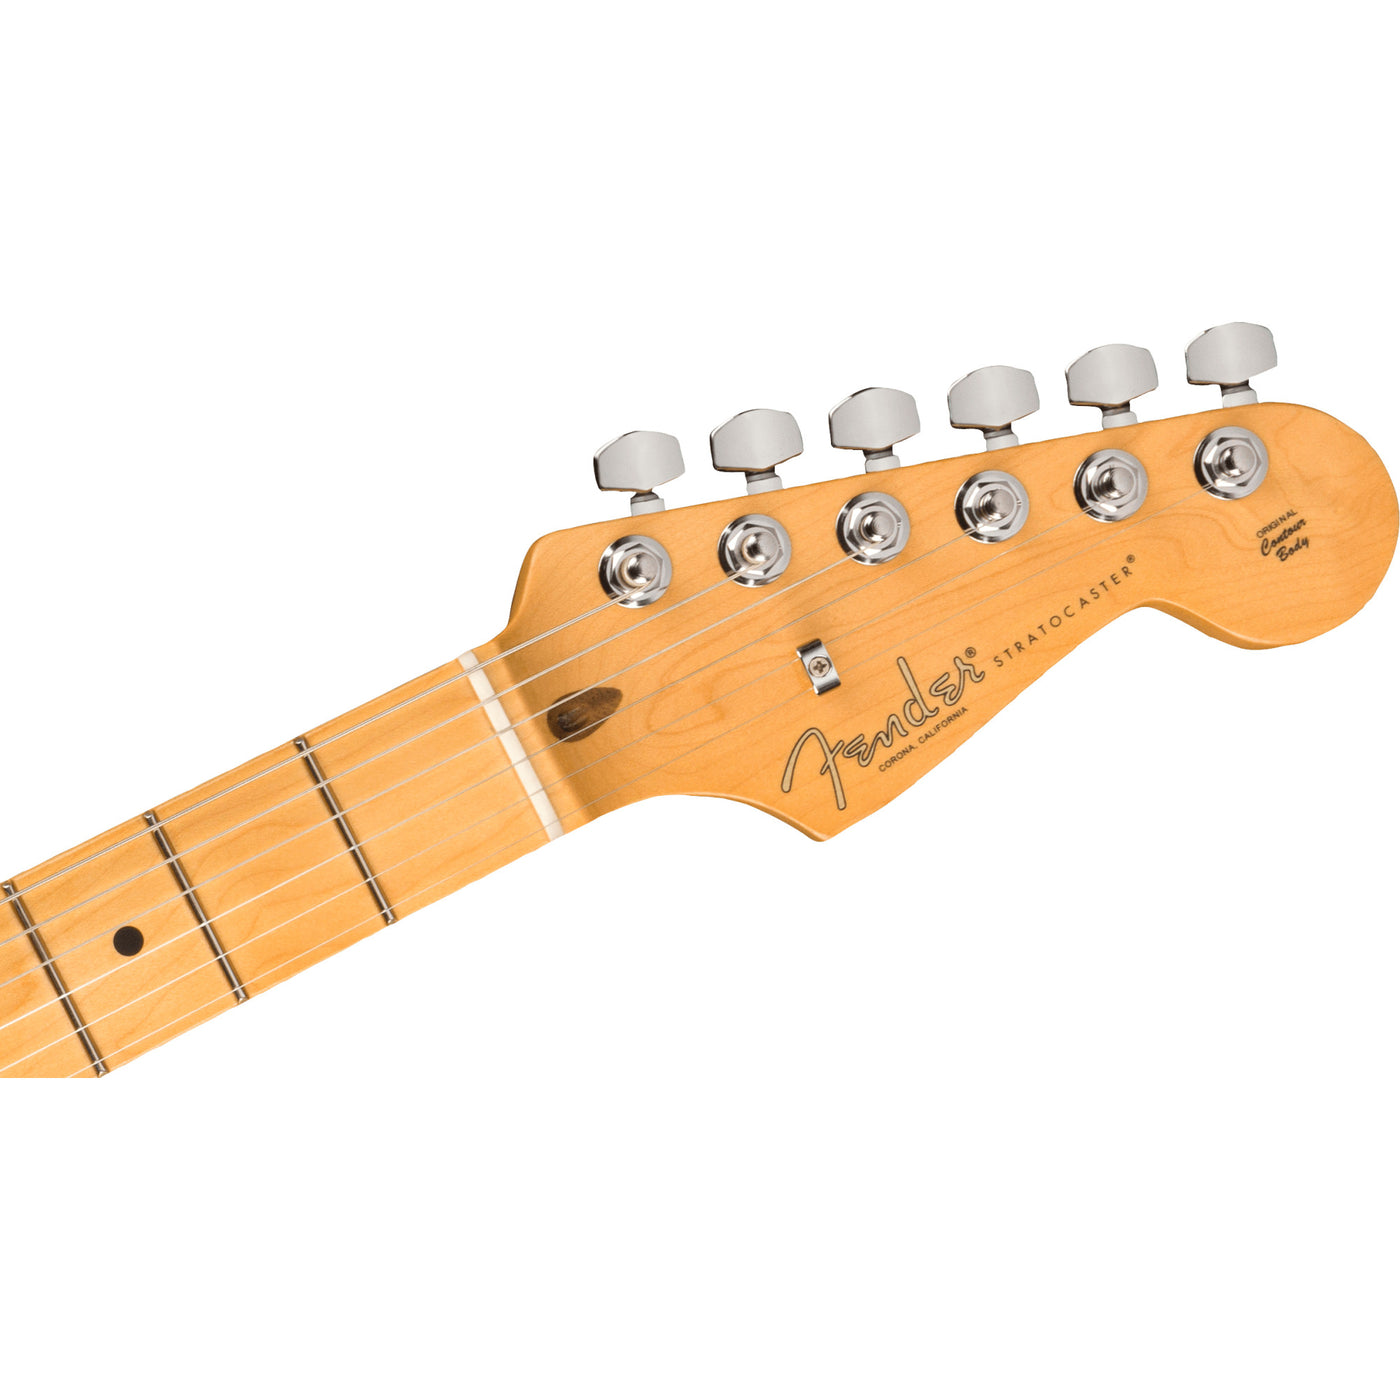 Fender American Professional ll Stratocaster HSS Electric Guitar, Sienna Sunburst (0113912747)